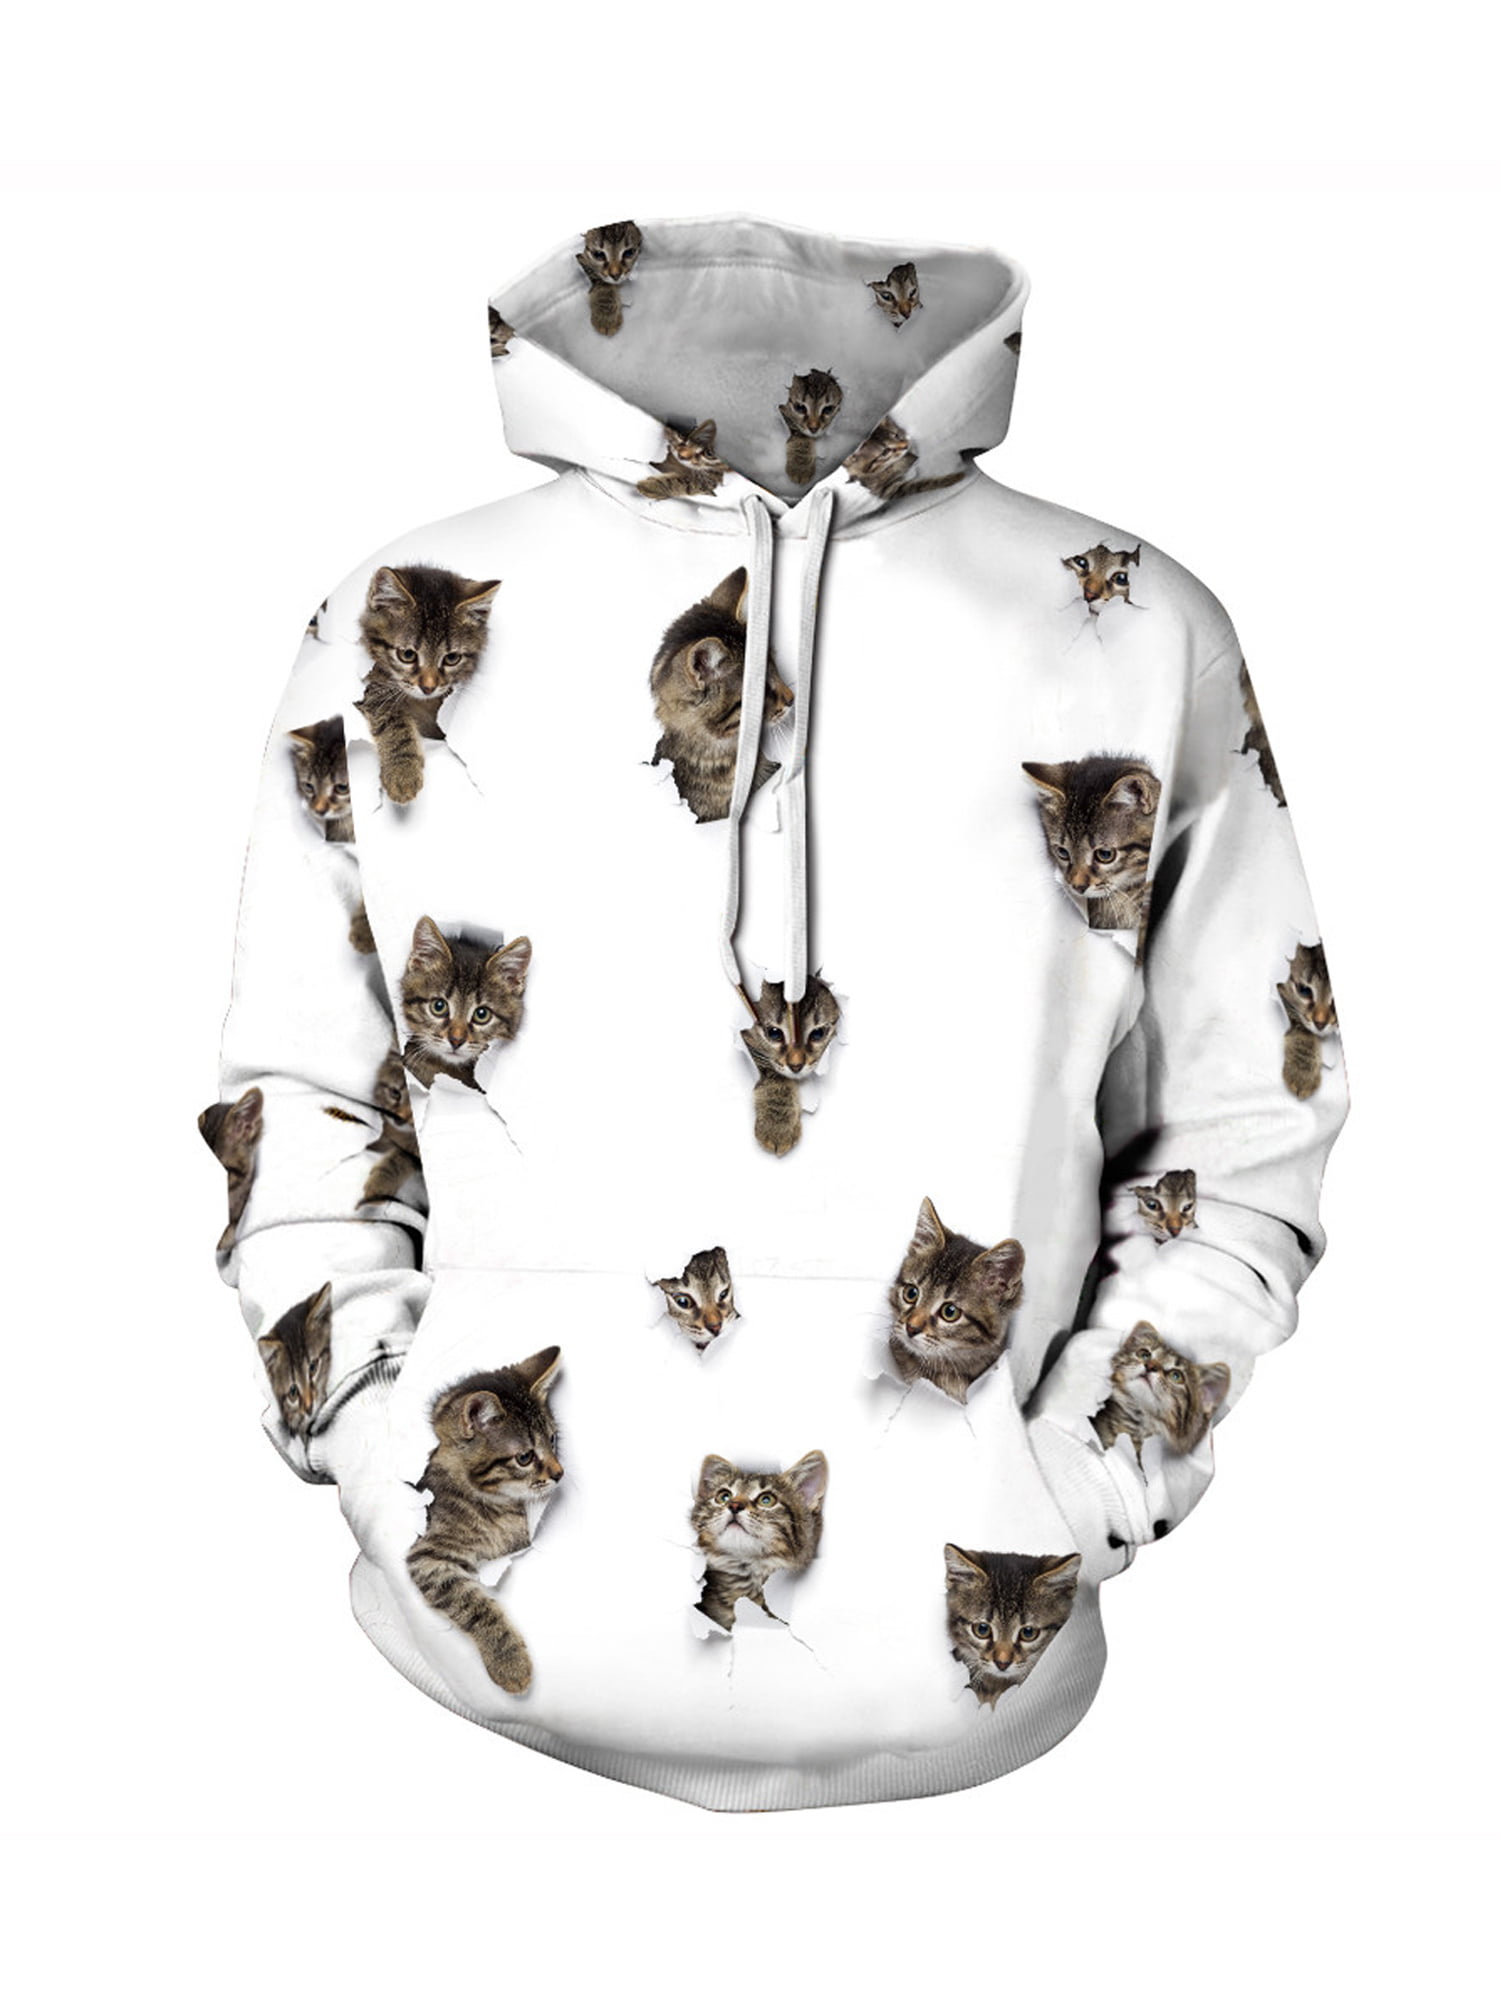 Womens/Mens Funny Pizza Cat Galaxy 3D Print Casual Sweatshirt Hoodies Pullovers 